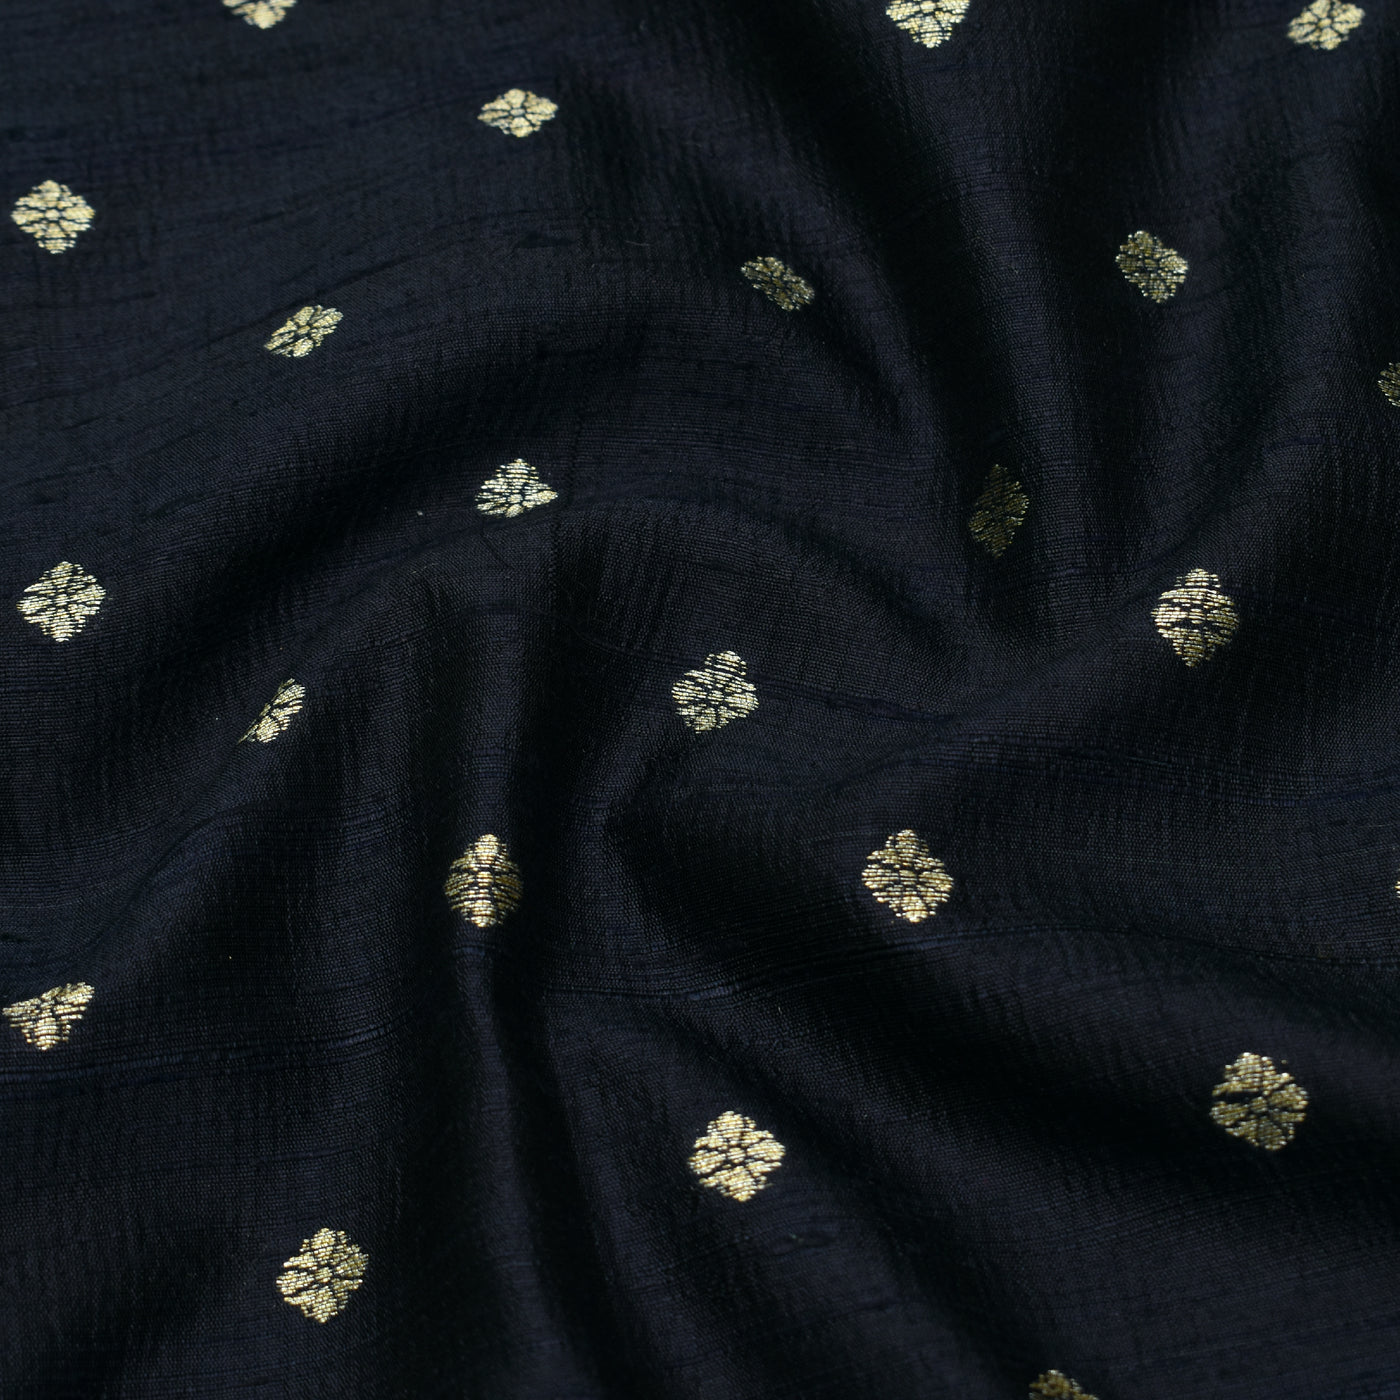 dark-navy-blue-tussar-rawsilk-fabric